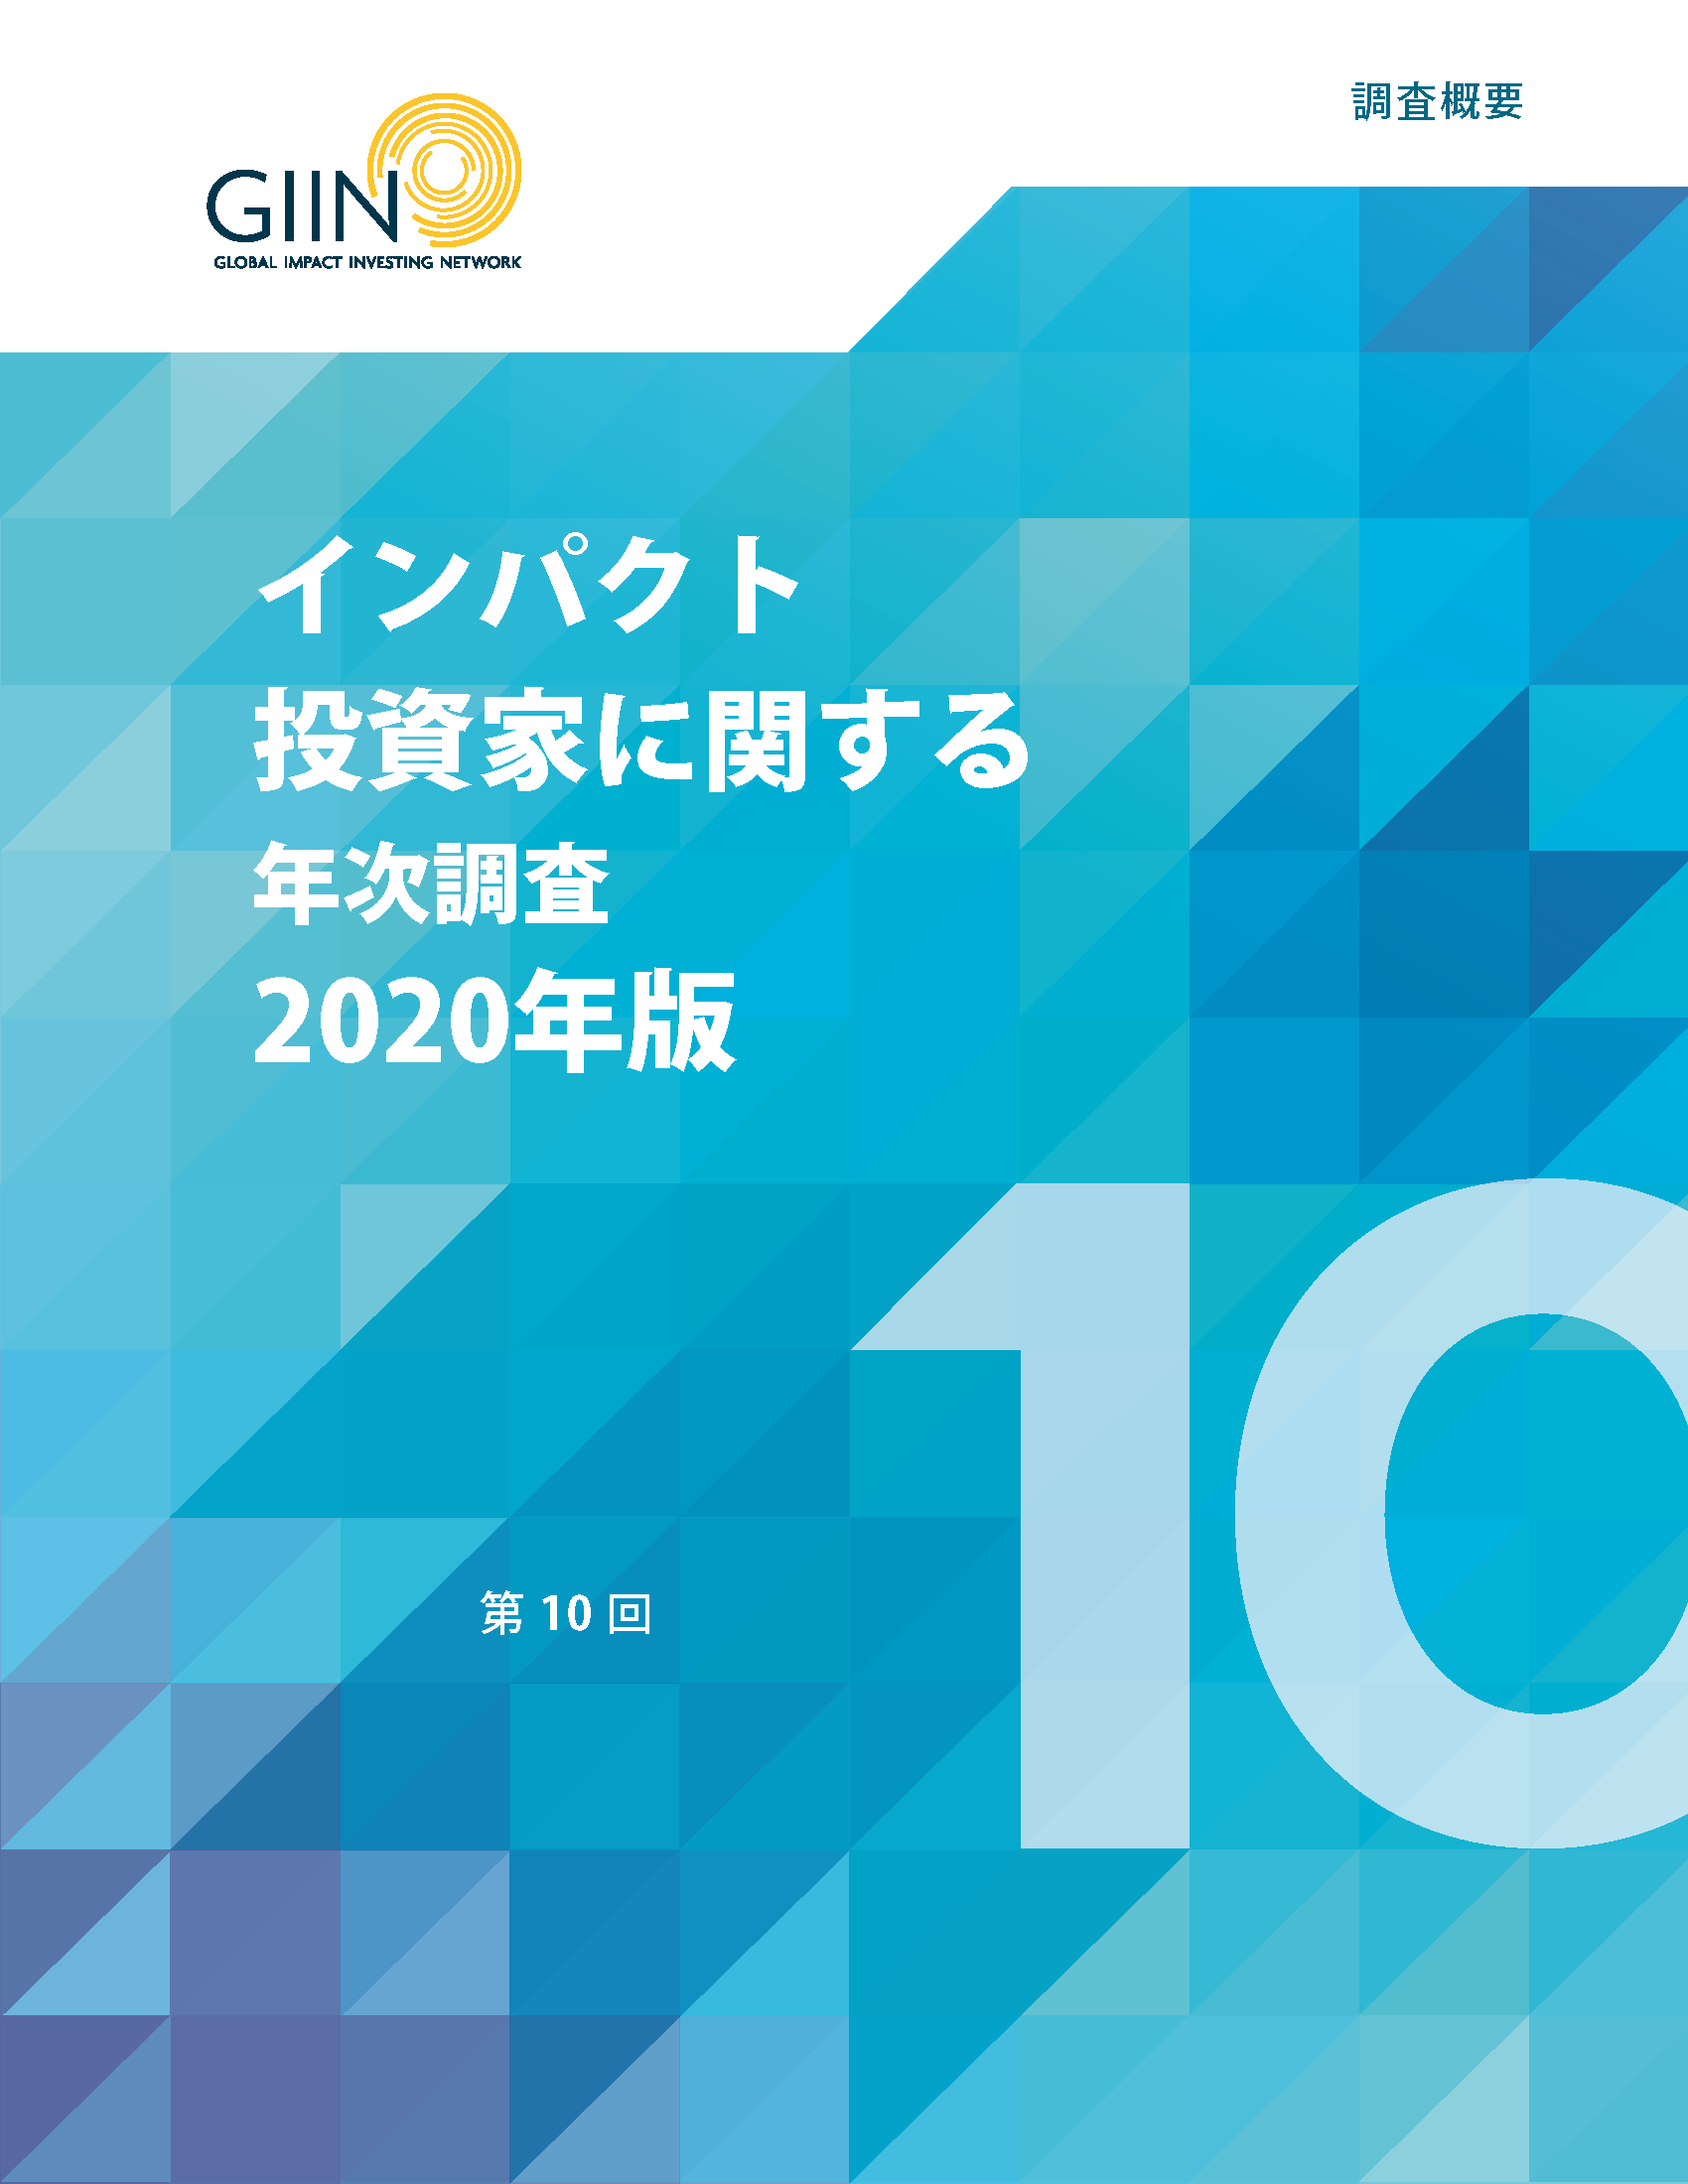 GIIN発行「インパクト投資家に関する年次報告書2020（概要版）」の和訳が公開されました／The GIIN's "2020 Annual Report Impact Investor Survey" is now available in Japanese